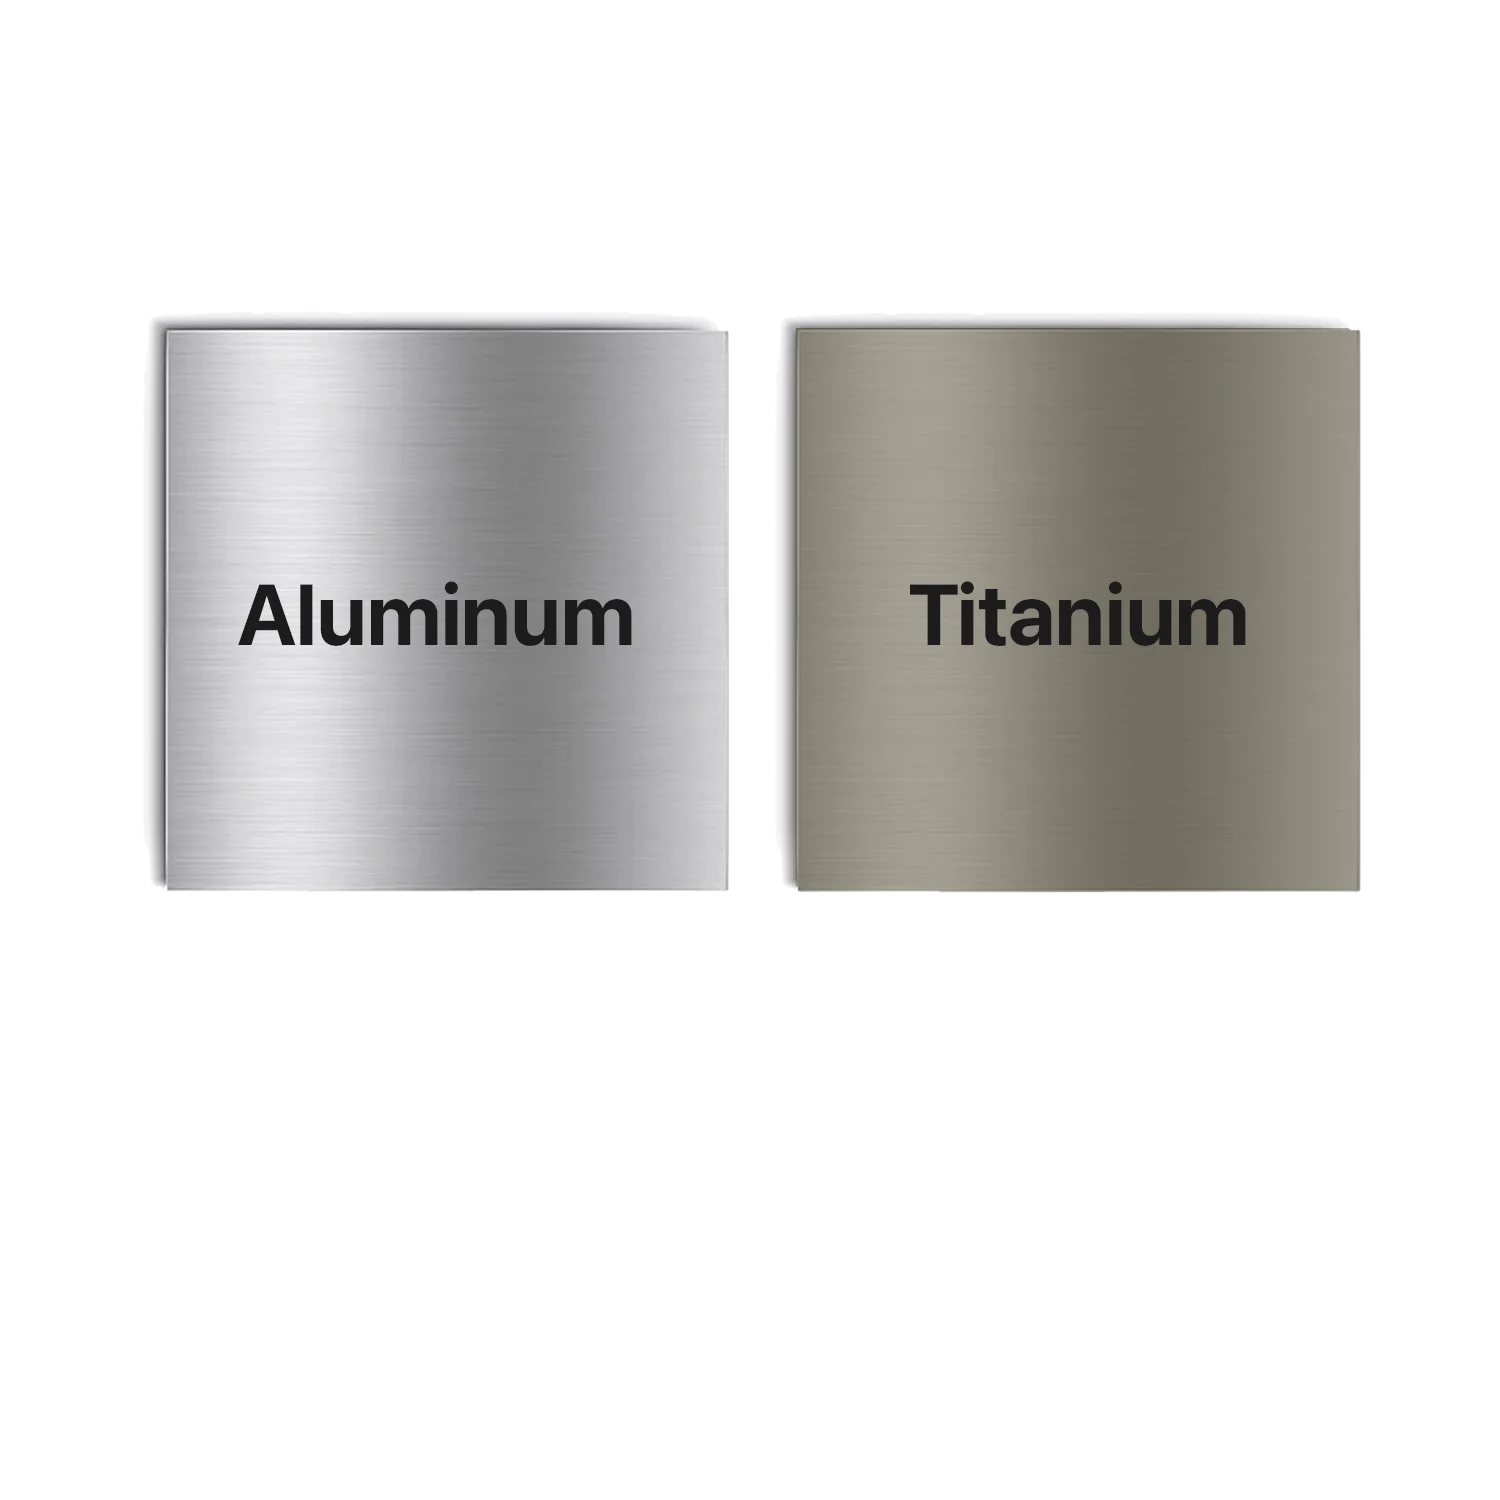 shuffle titanium wallet and aluminum wallet